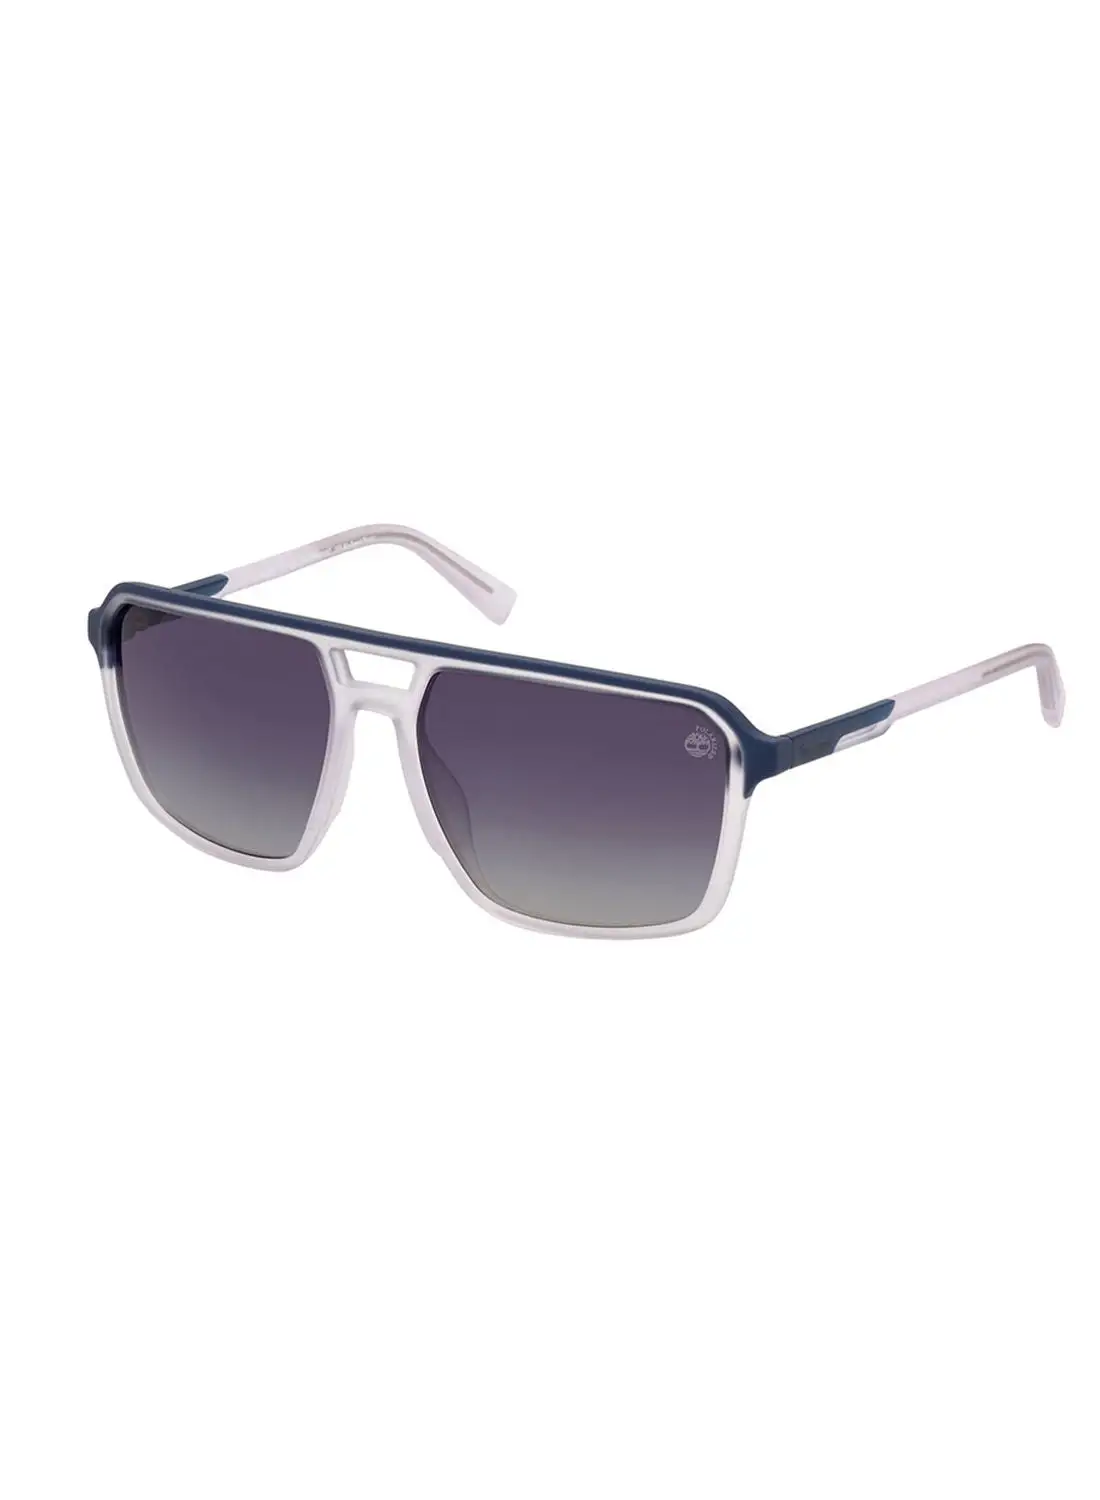 Timberland Sunglasses For Men TB930126D60